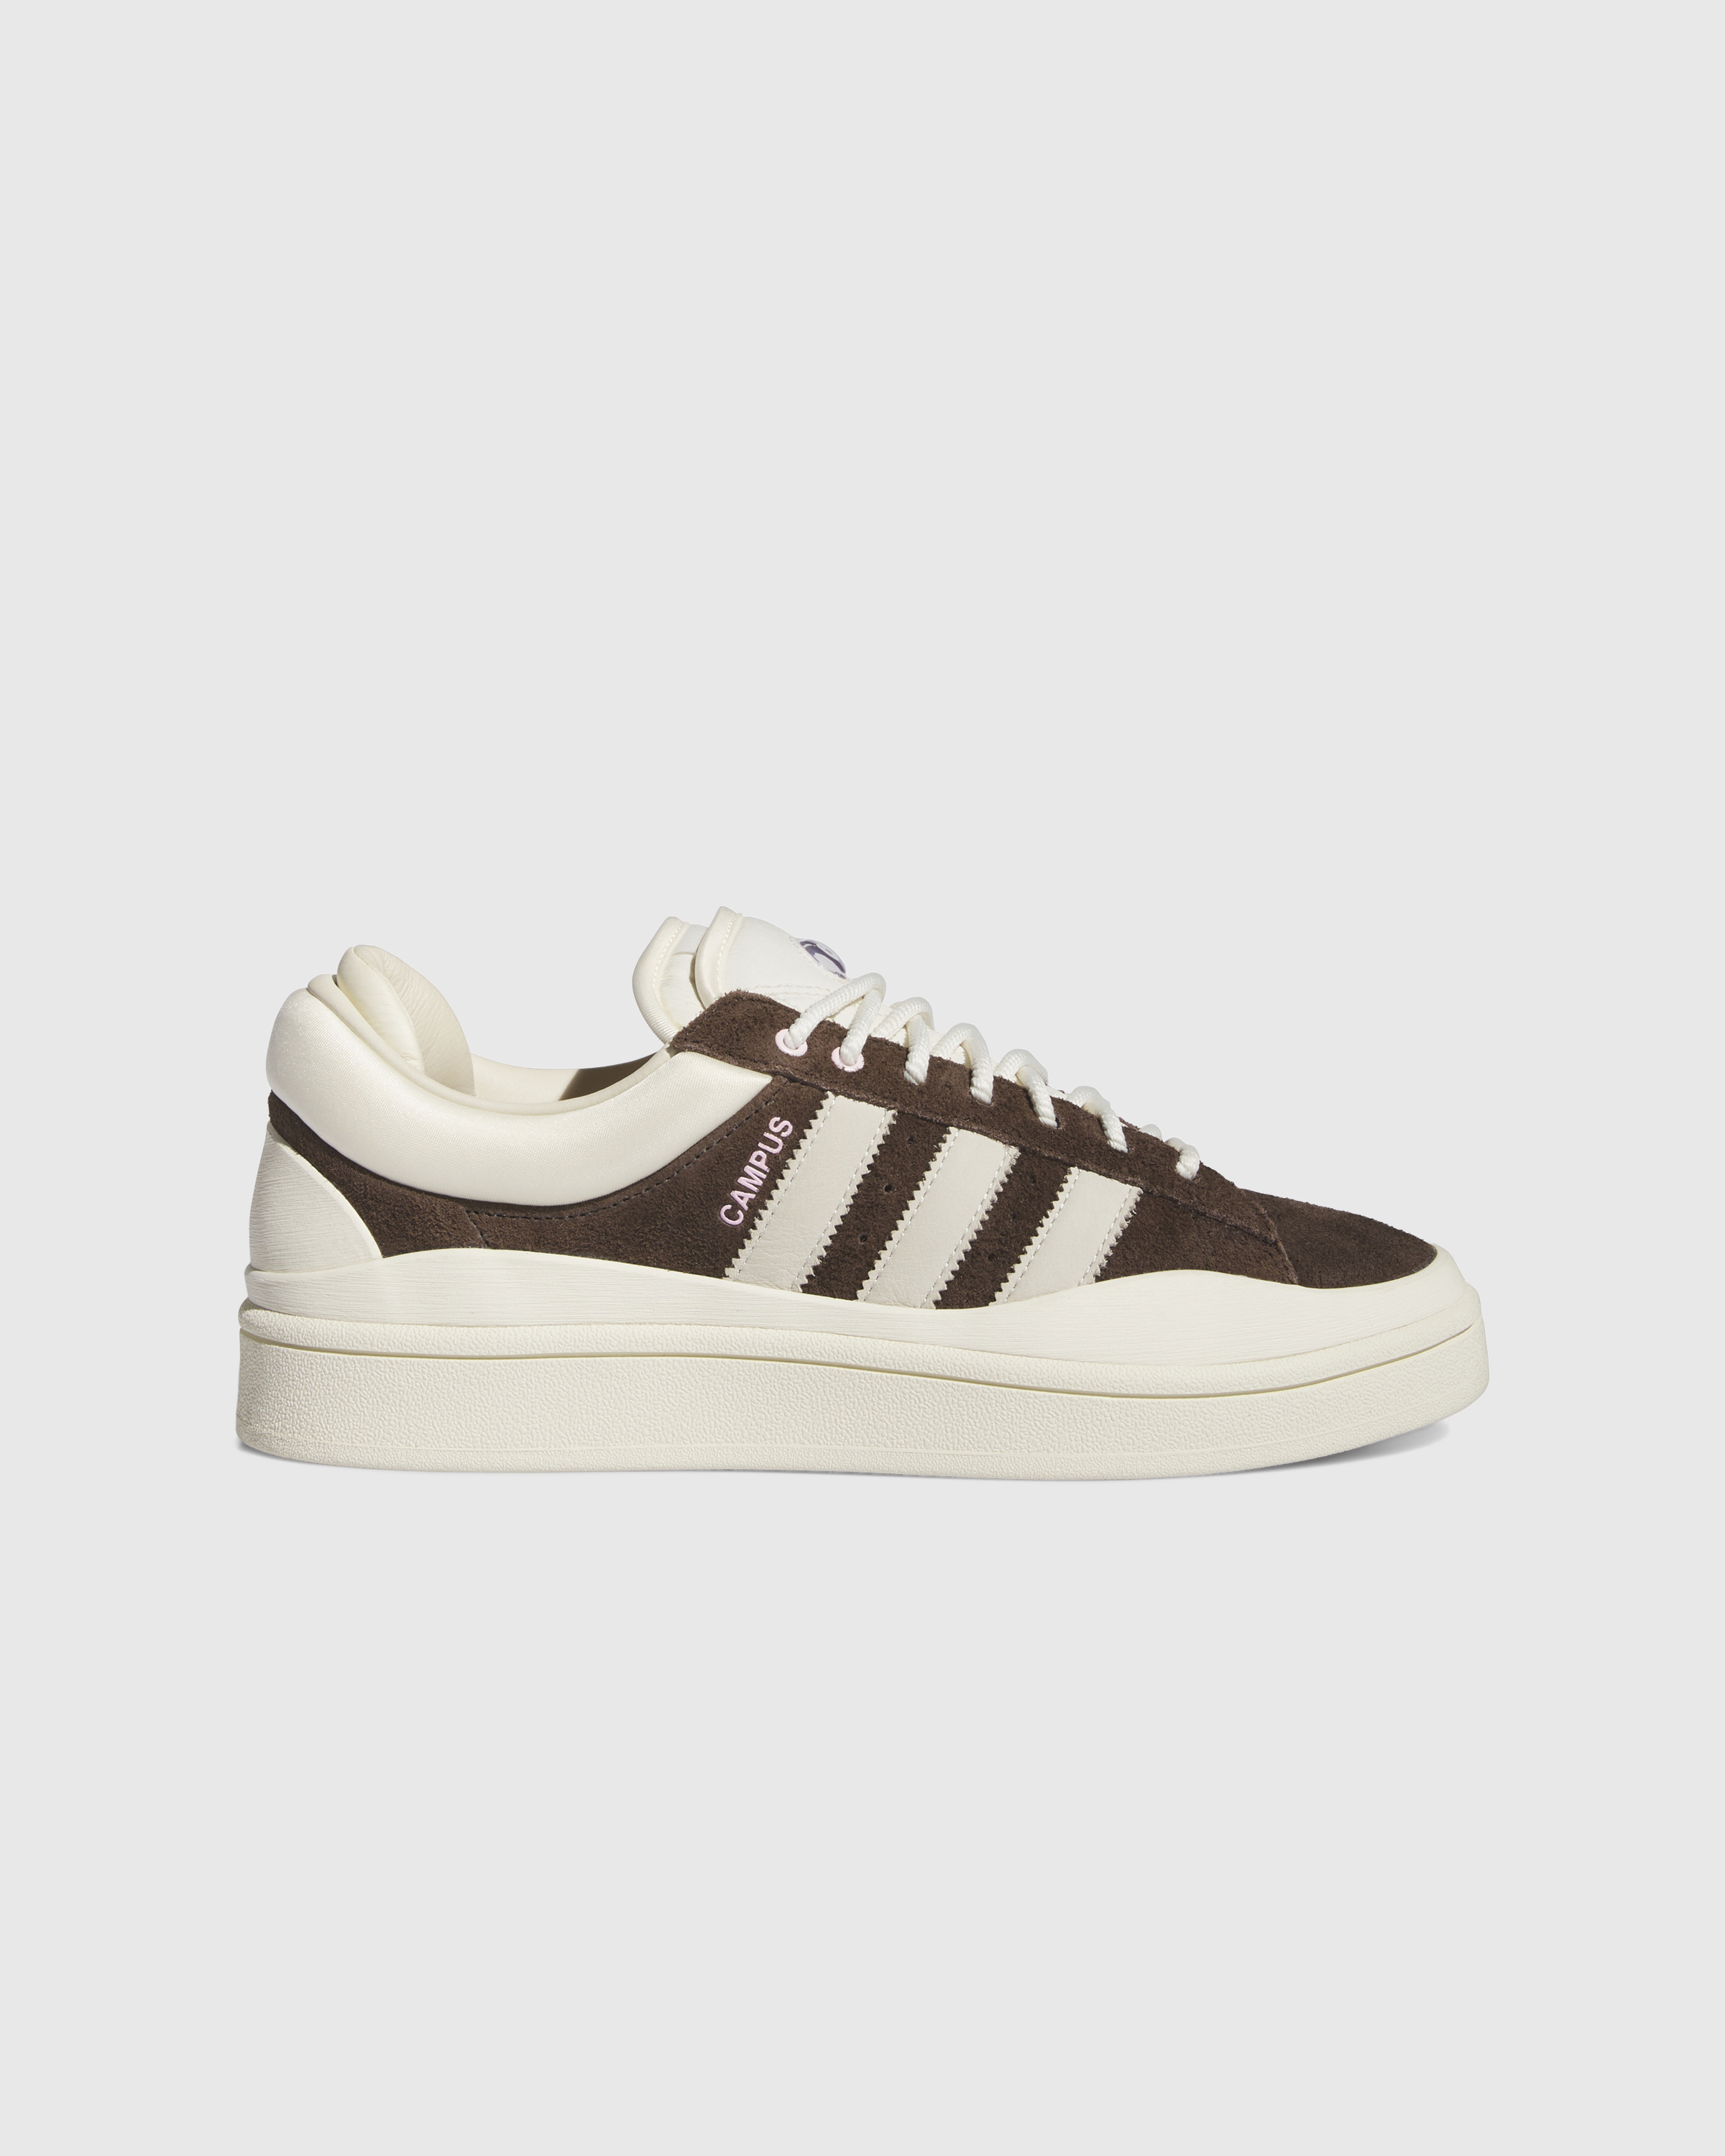 Adidas – Bad Bunny Campus Dark Brown - Sneakers - Brown - Image 1